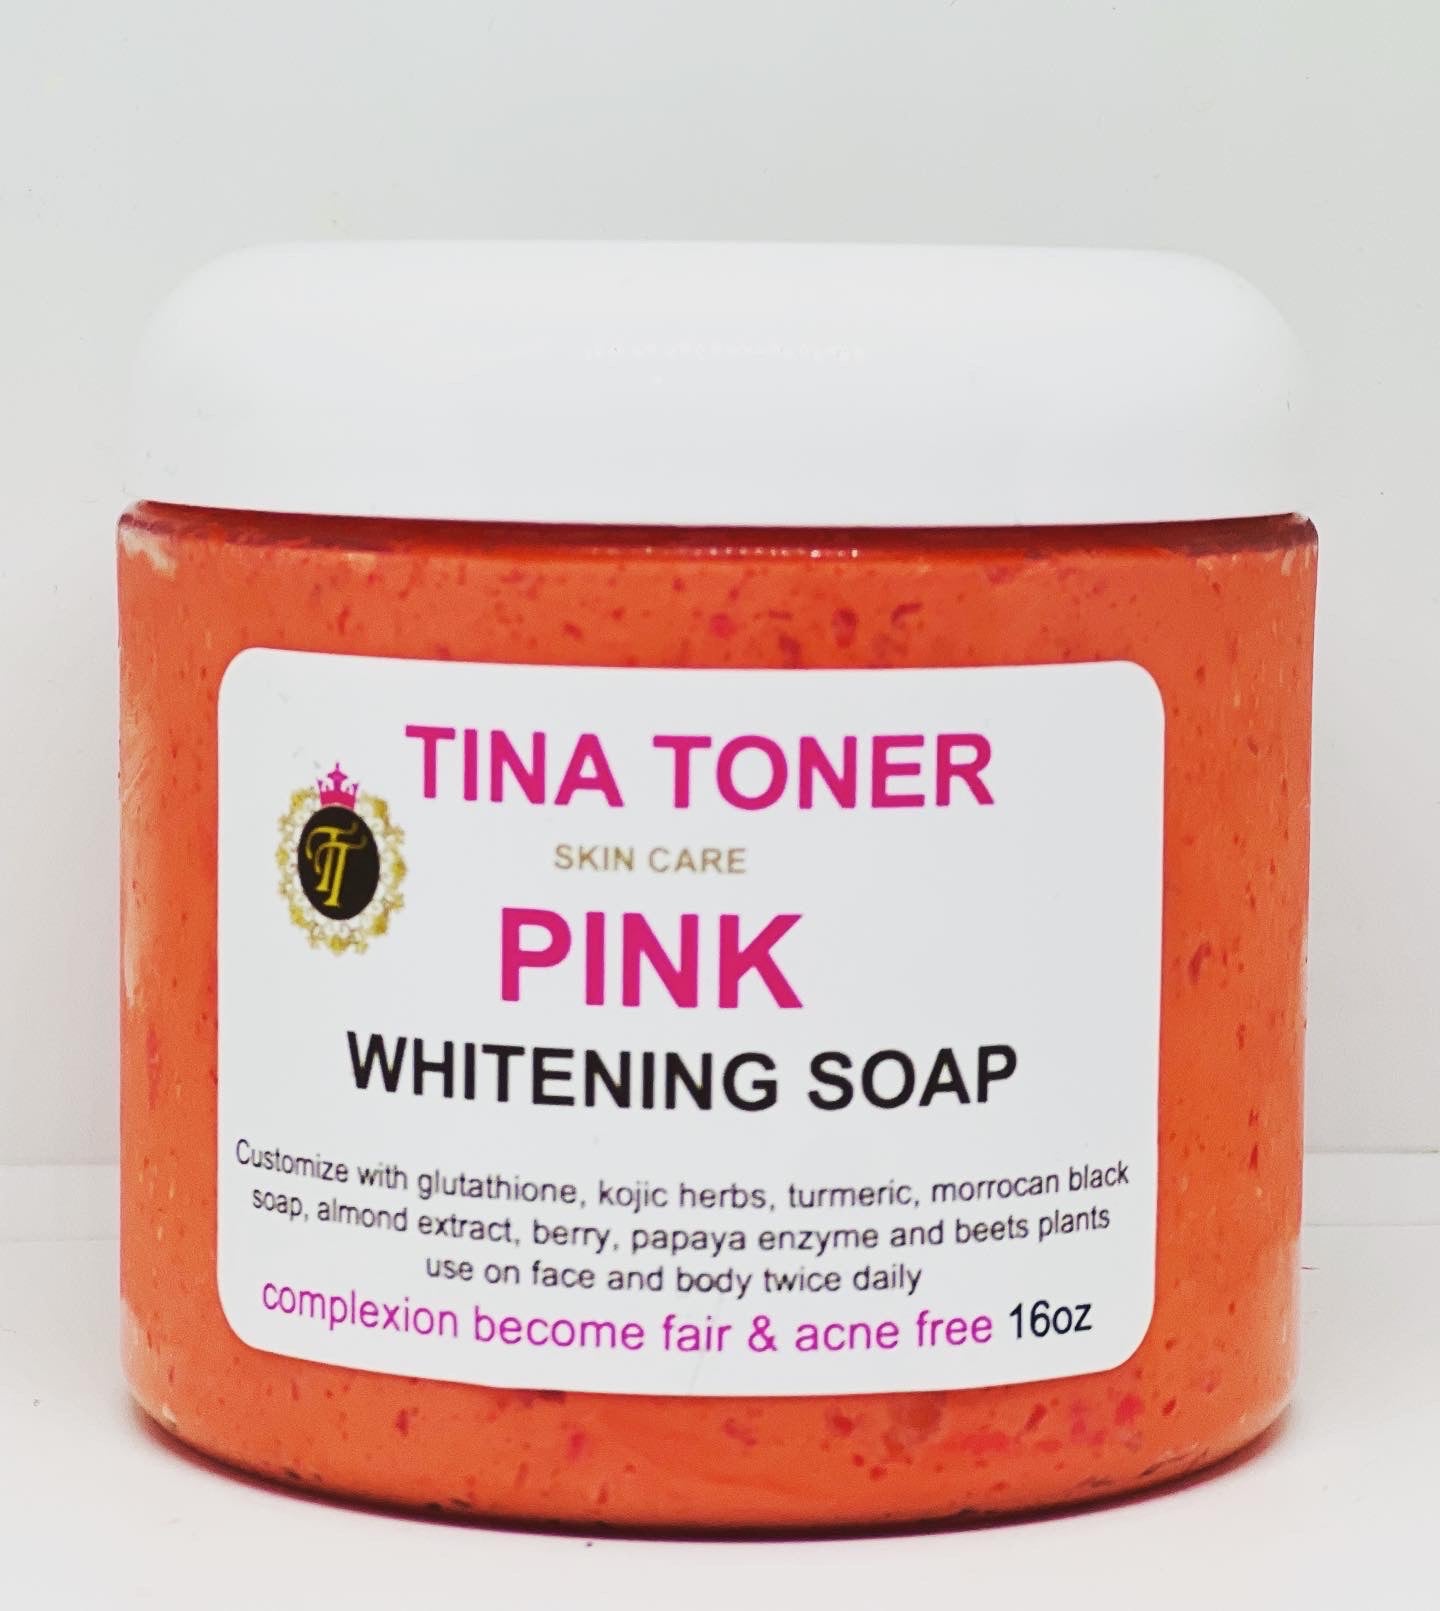 Tina toner PINK whitening soap 16 OZ/ 500ML